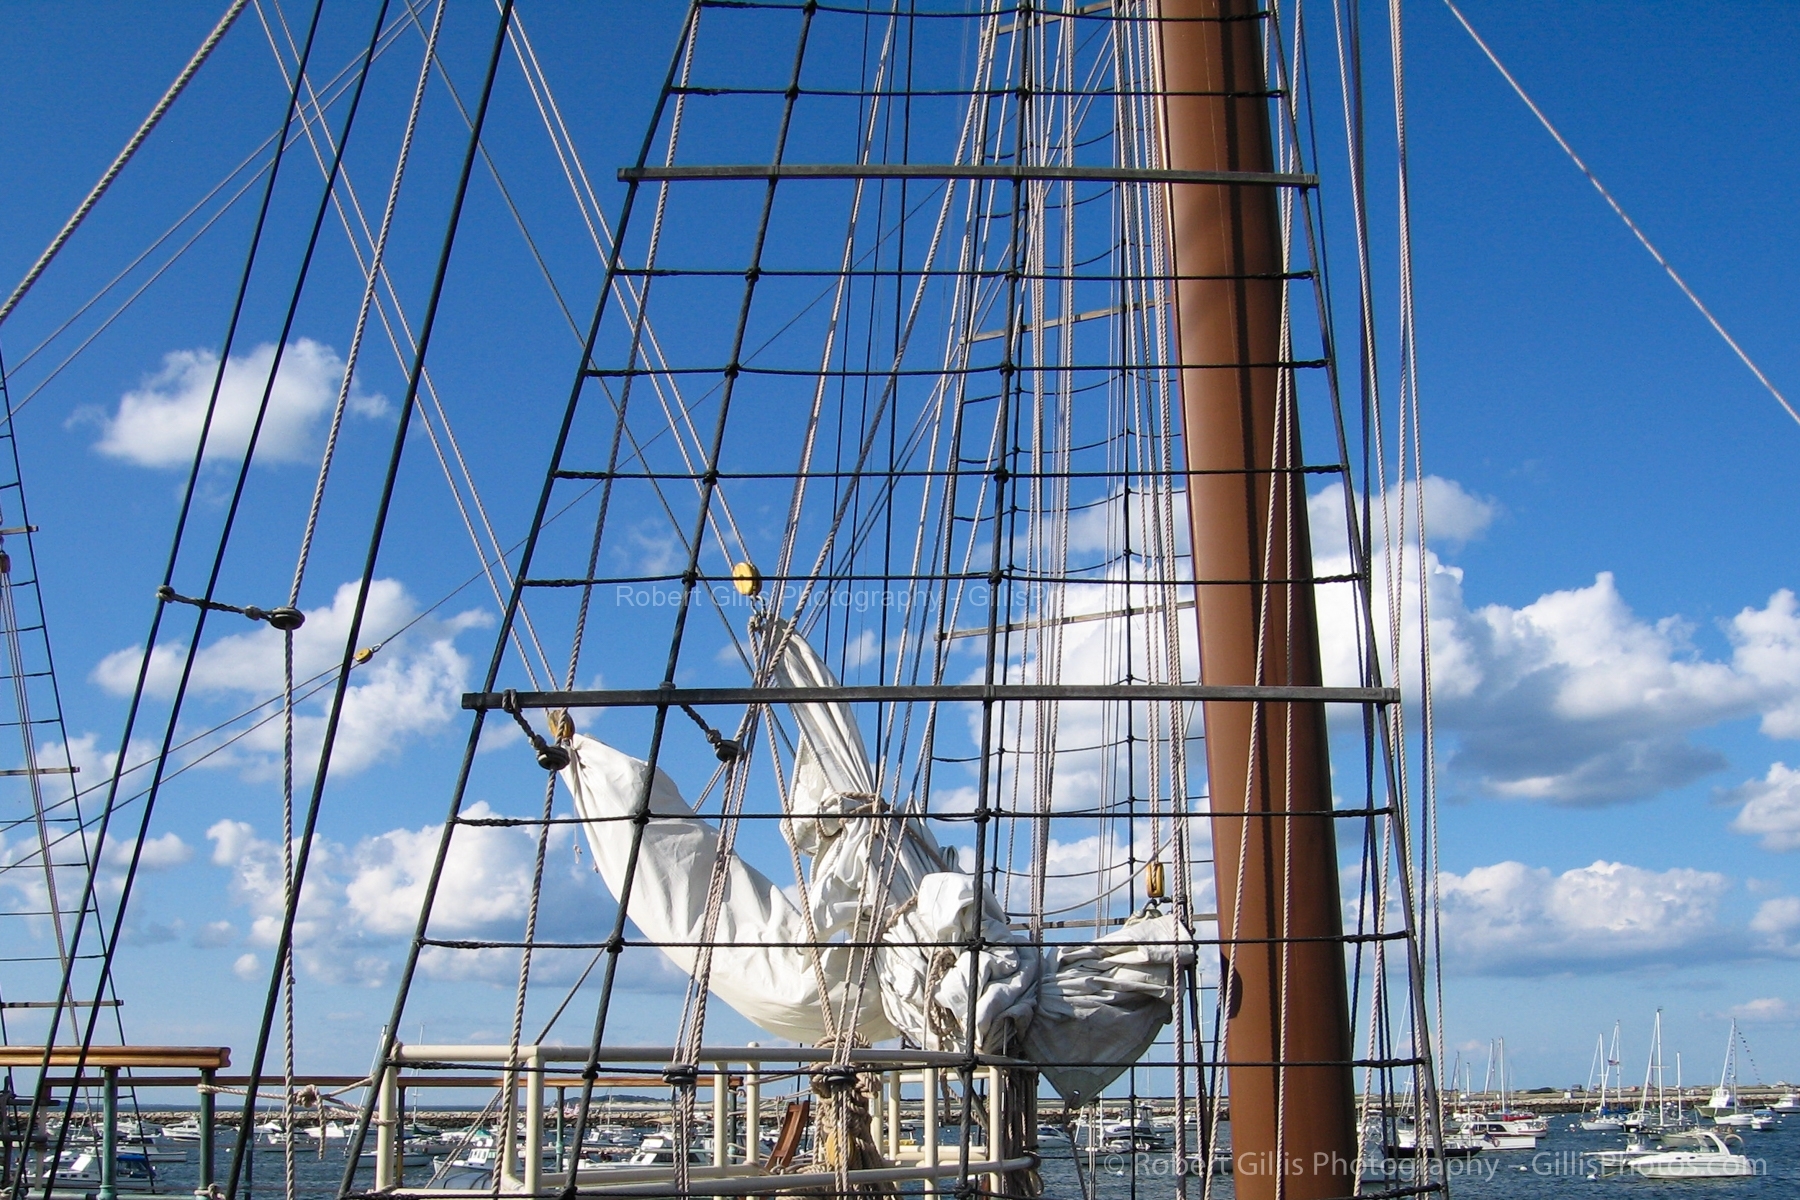 12 Plymouth - Tall ships mast